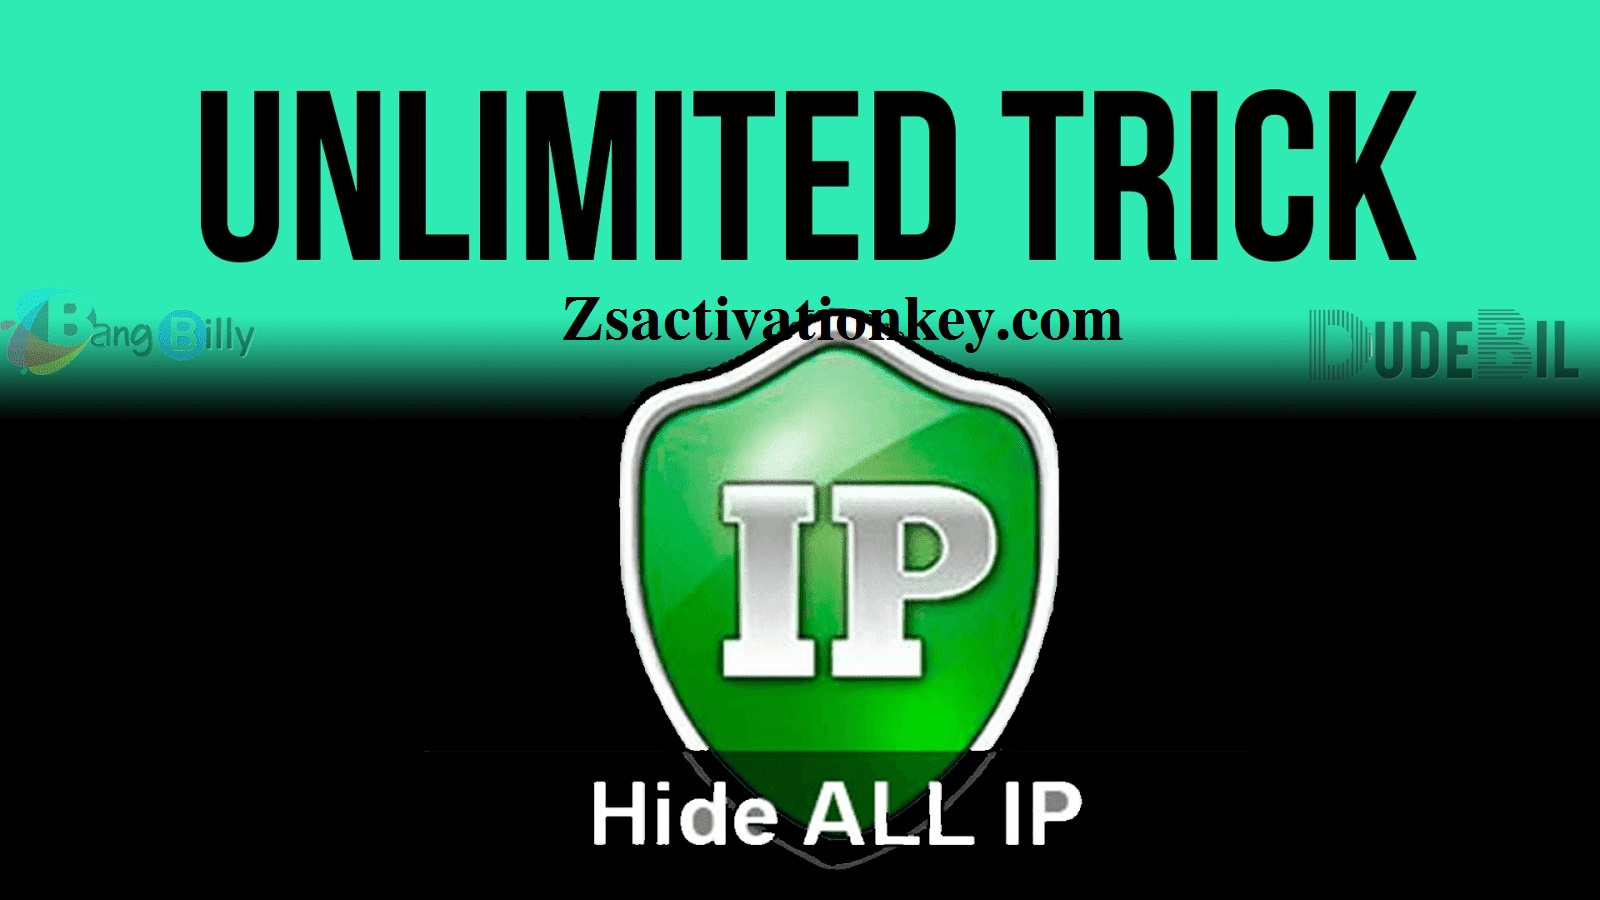 Hide ALL IP Crack